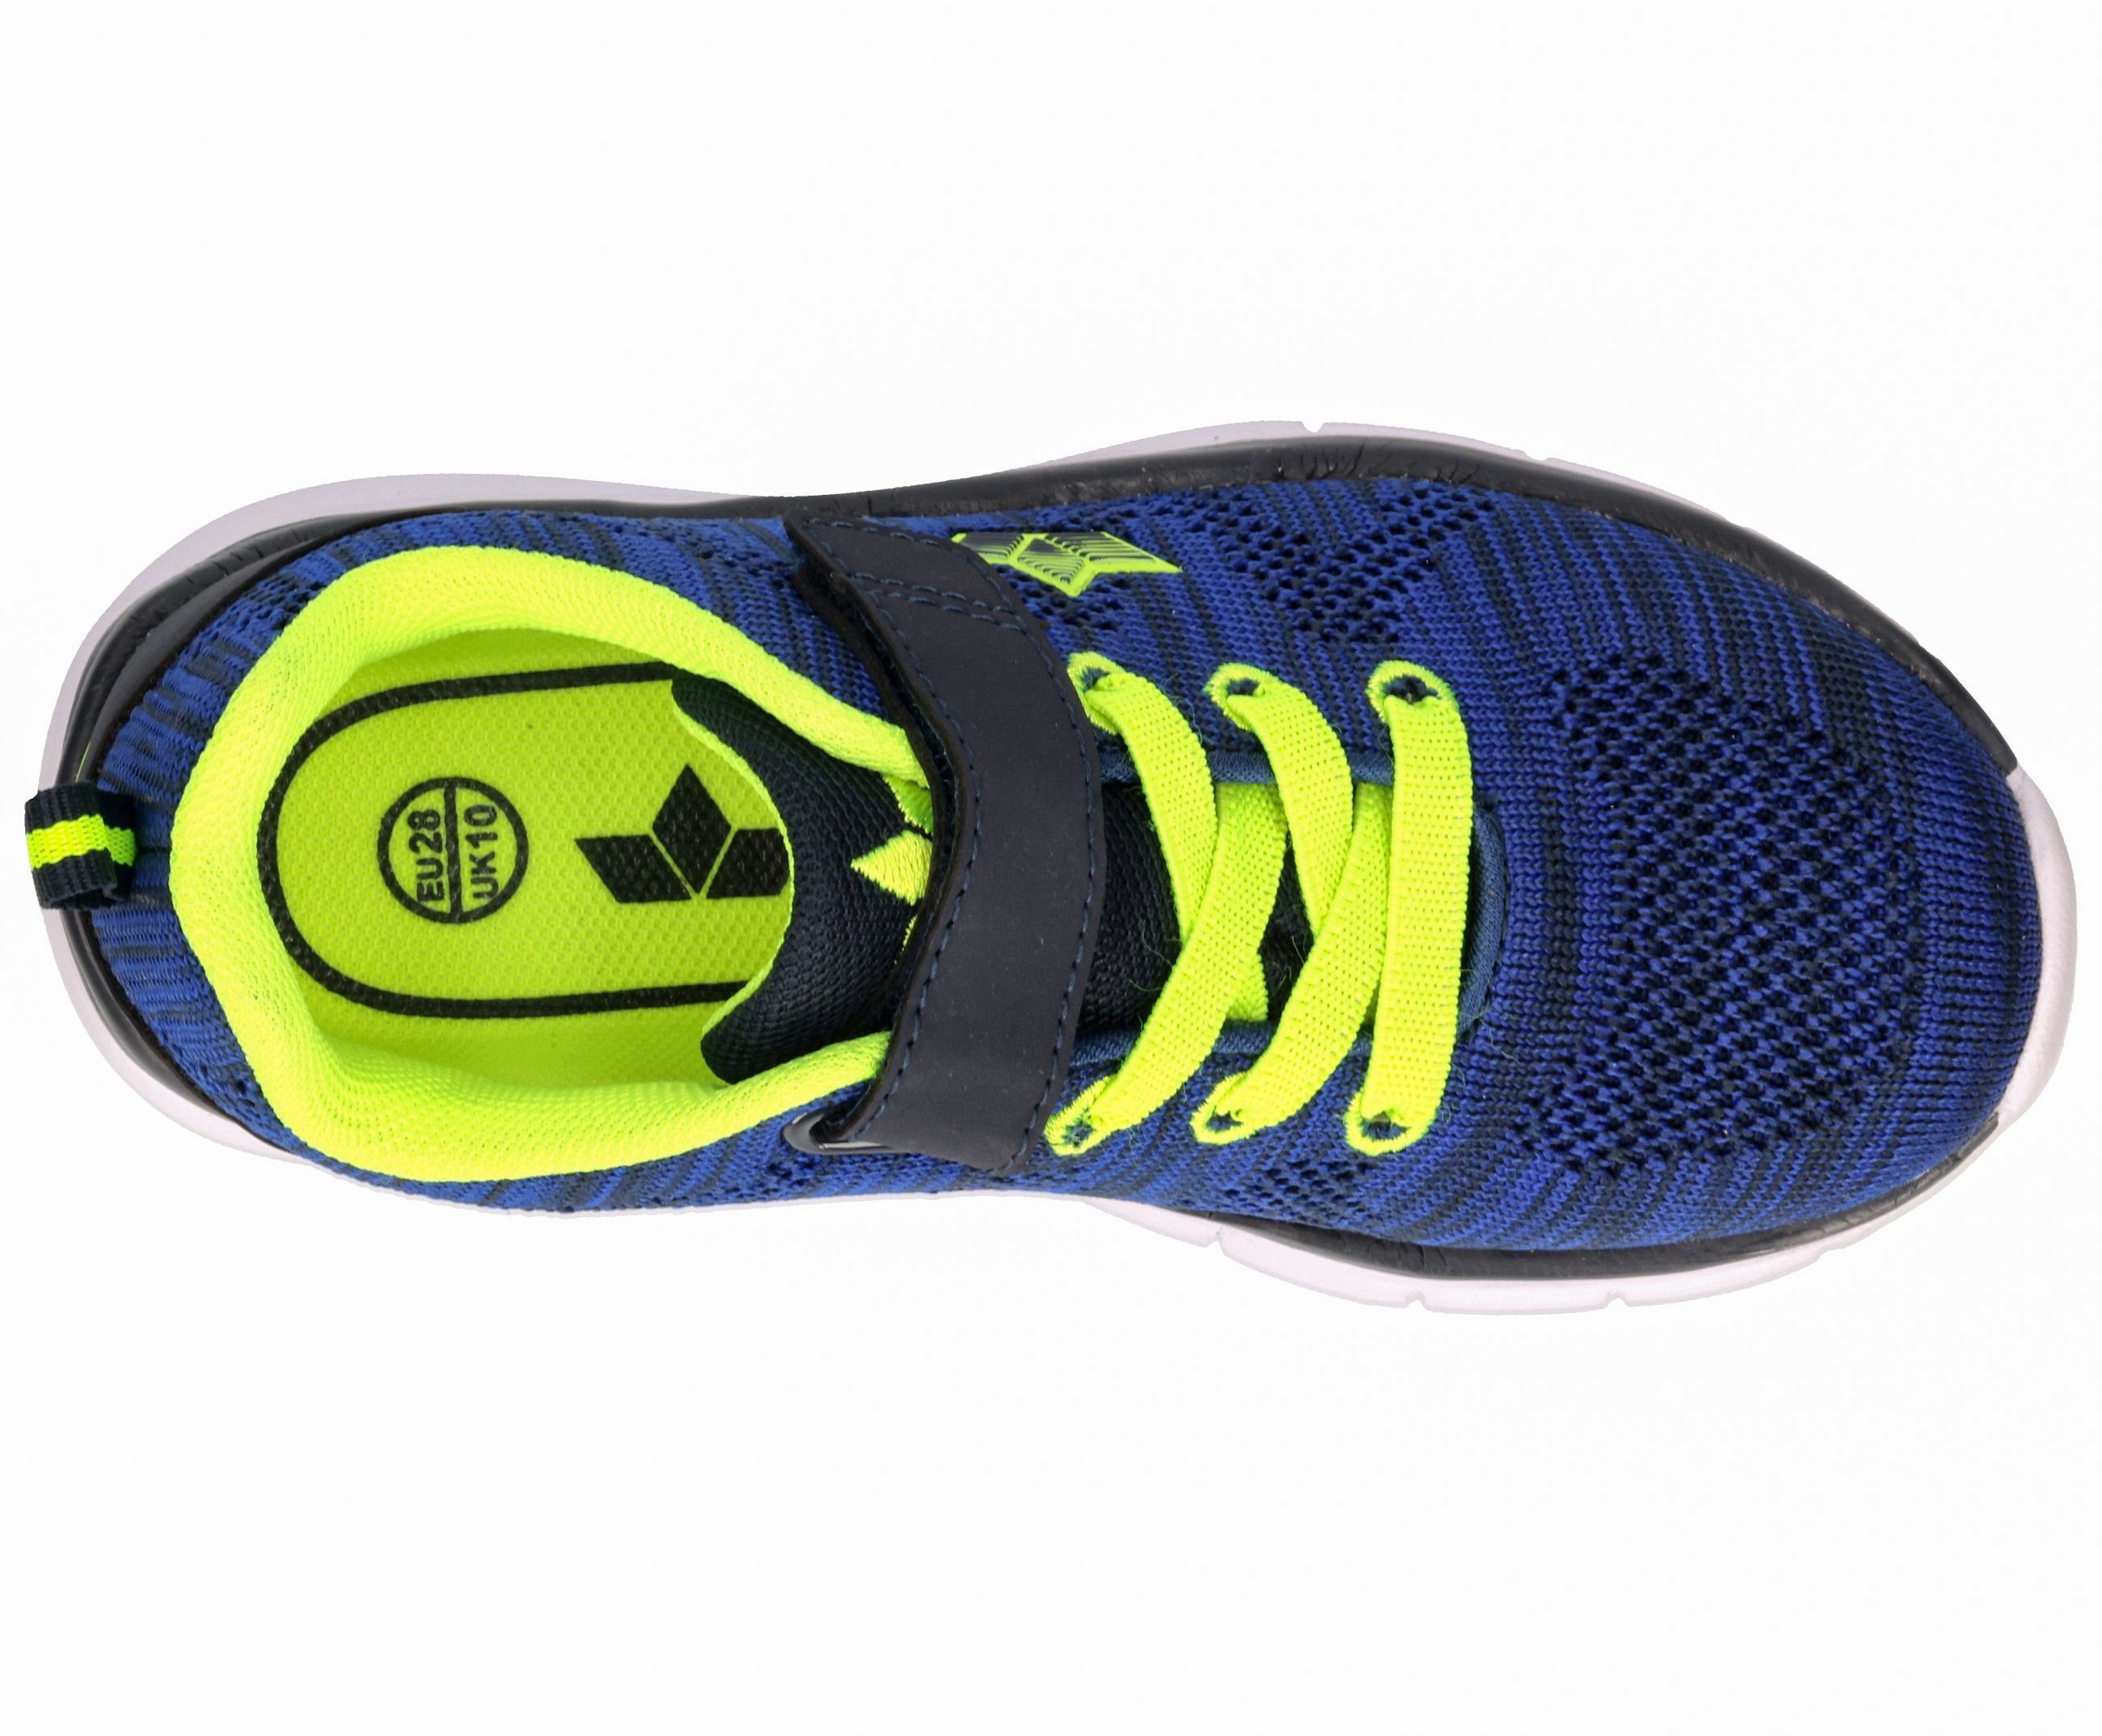 Lico Freizeitschuh blau/marine/lemon Colour VS Sneaker